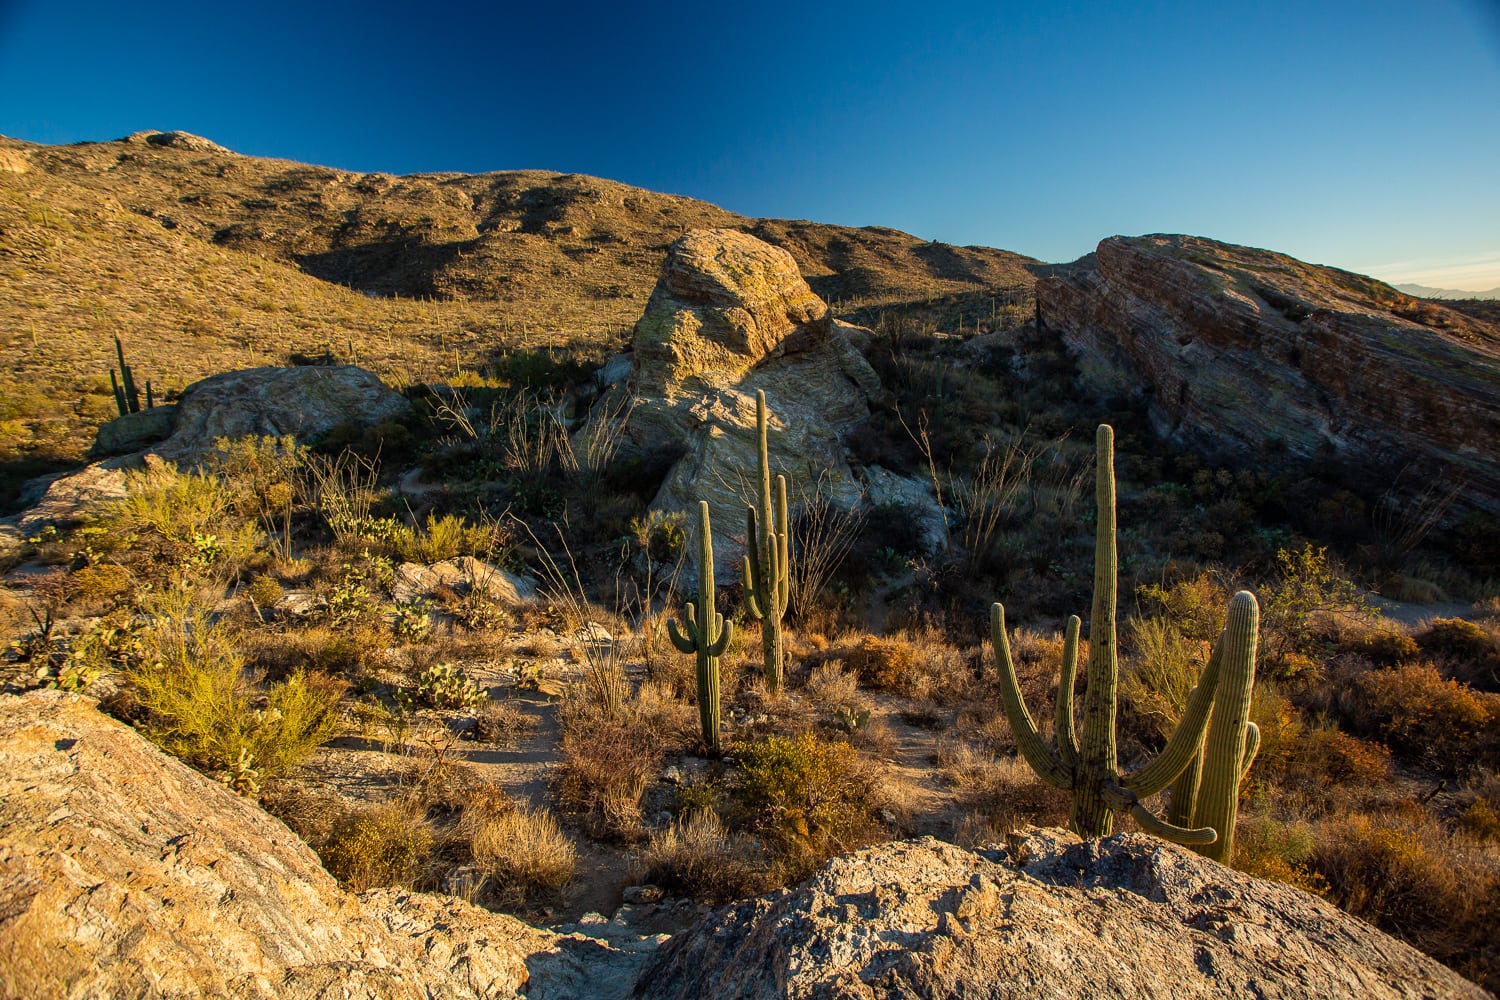 An east saguaro national park elopement location